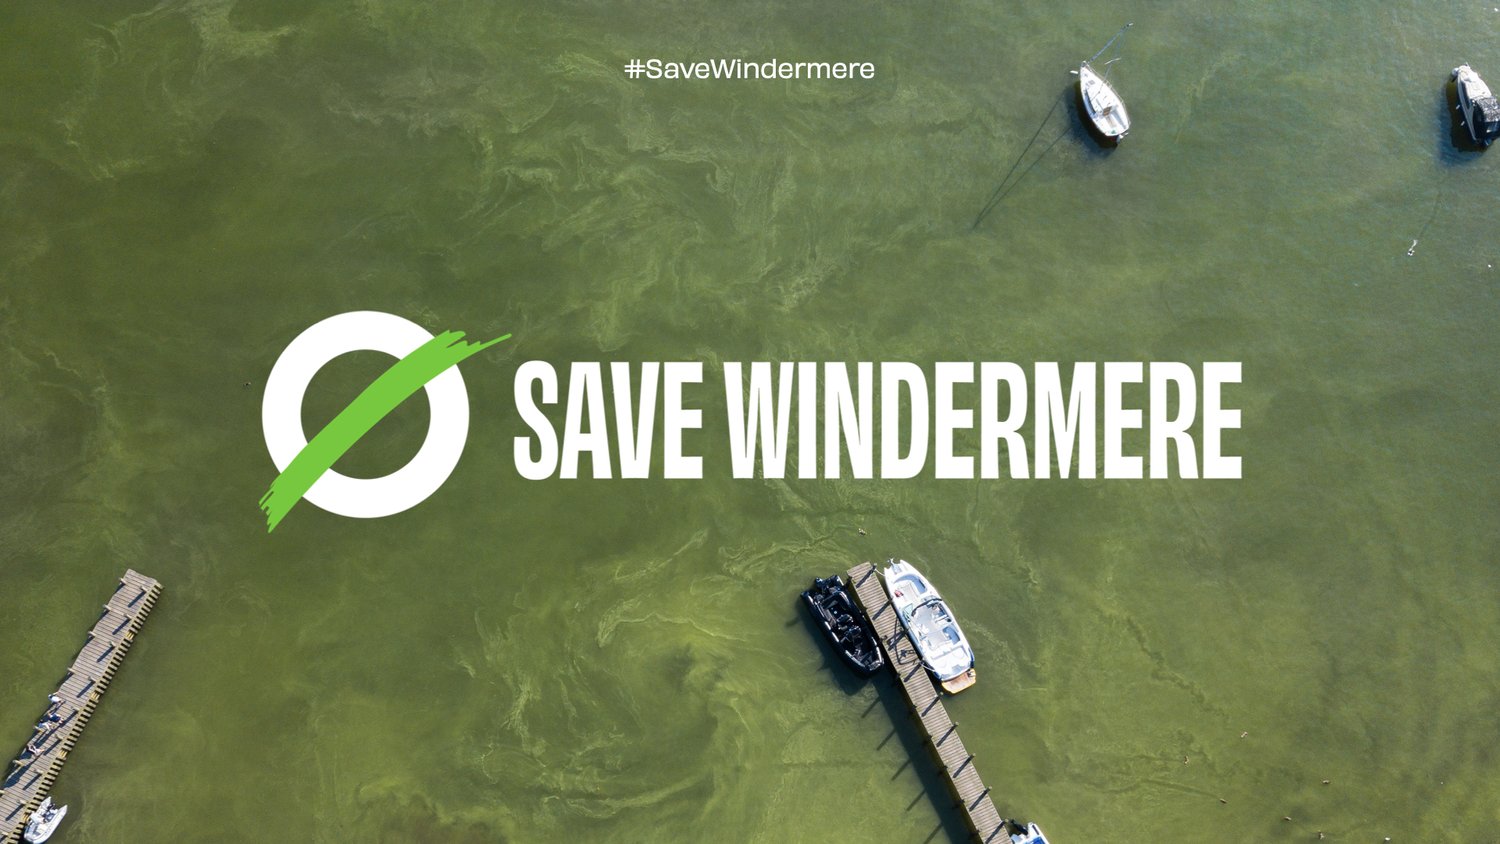 www.savewindermere.com